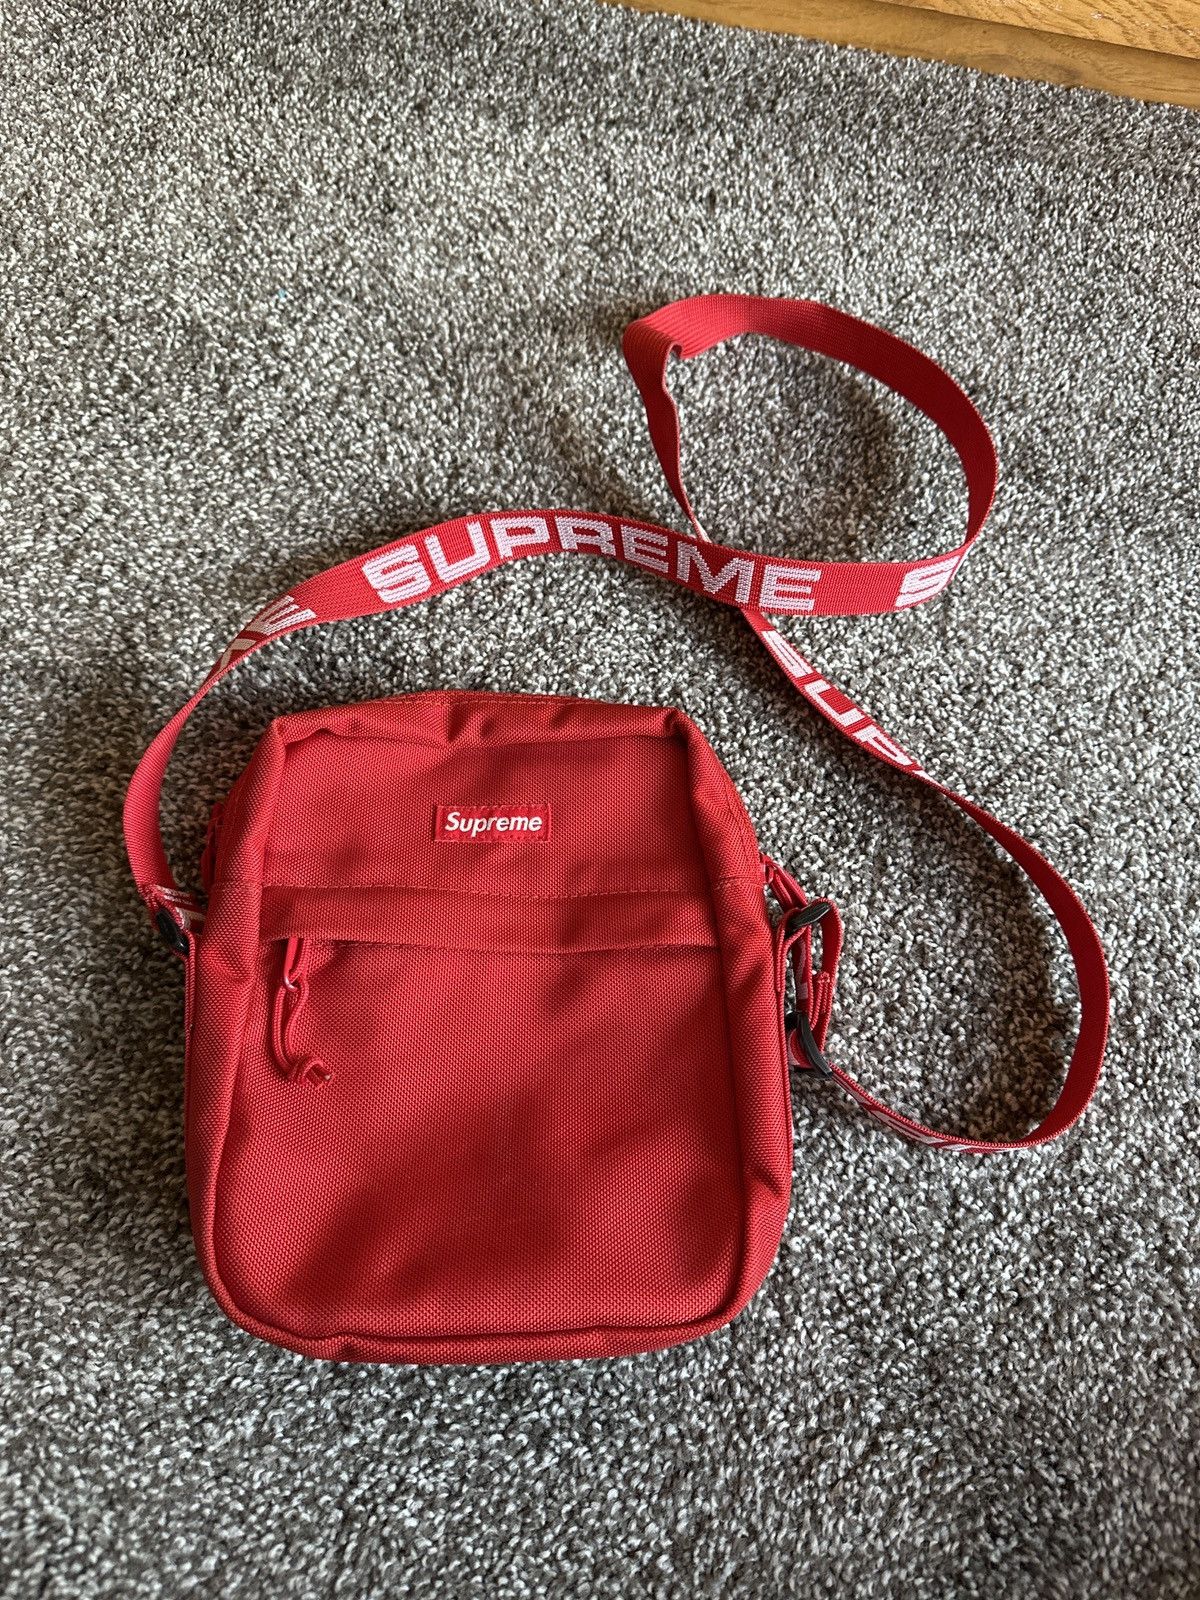 Supreme Supreme Shoulder Bag SS18 Size ONE SIZE - 1 Preview